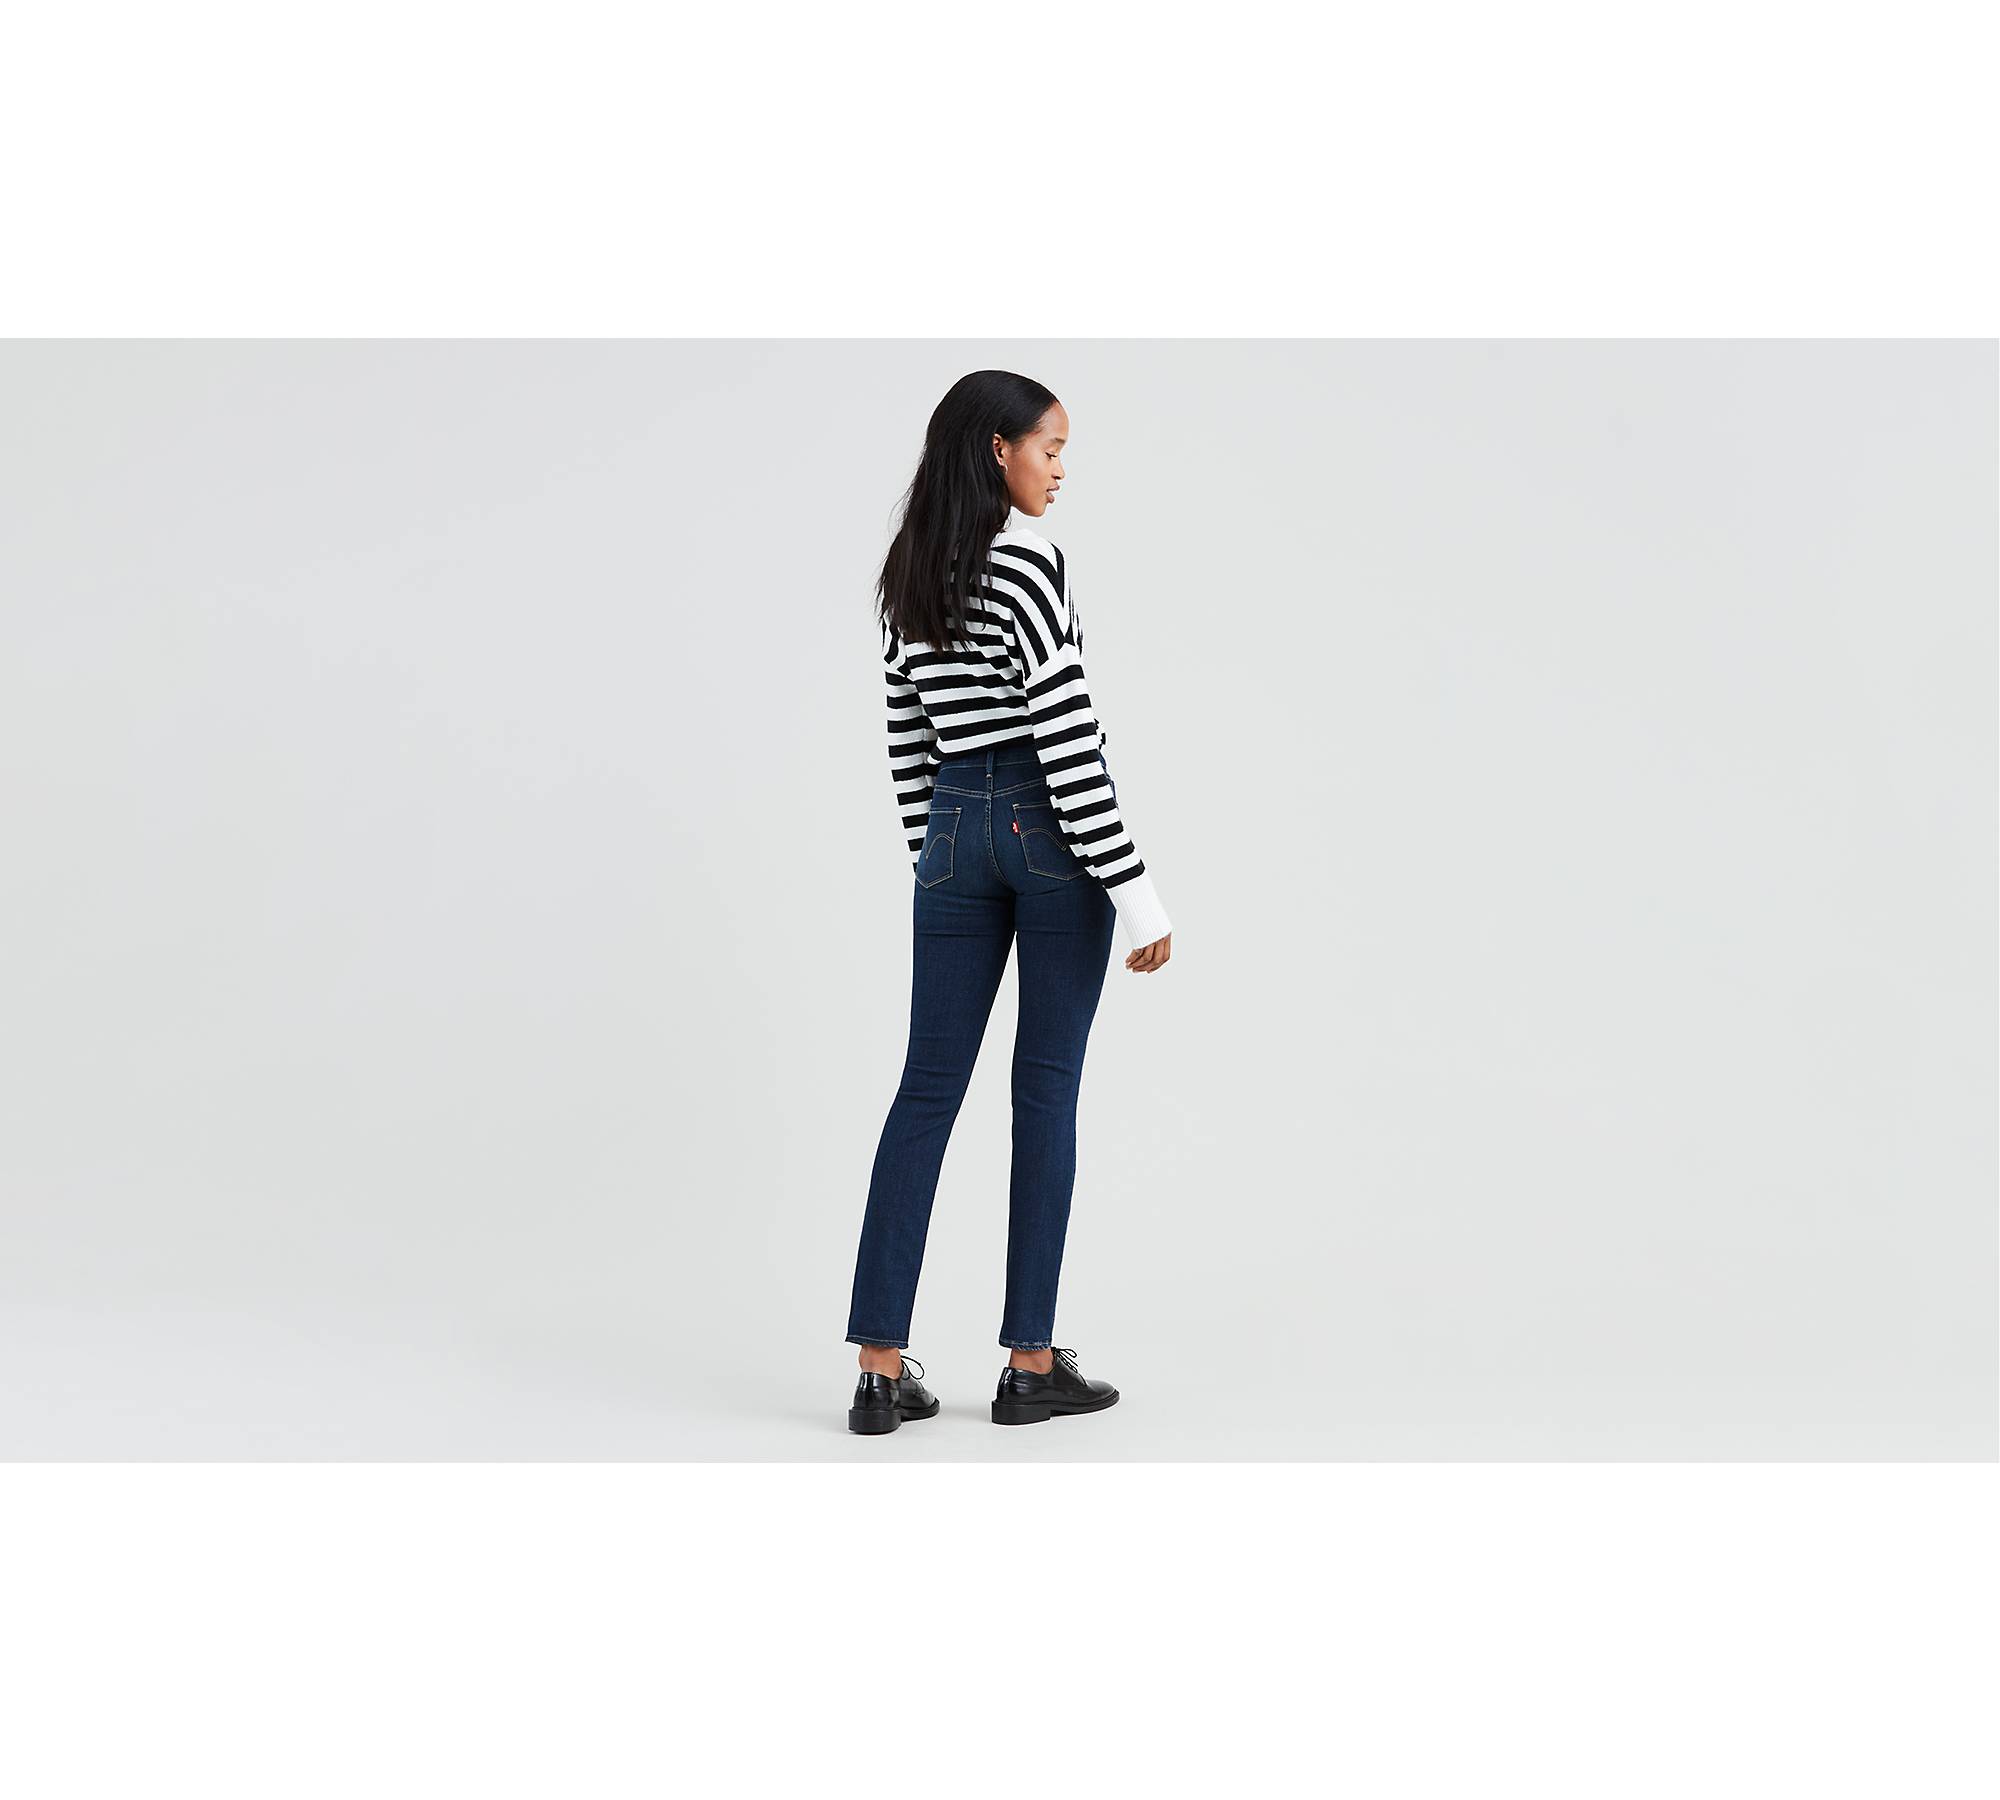 Buy Plazma Jeans Women's Skinny Fit Mid Waist Wine Color